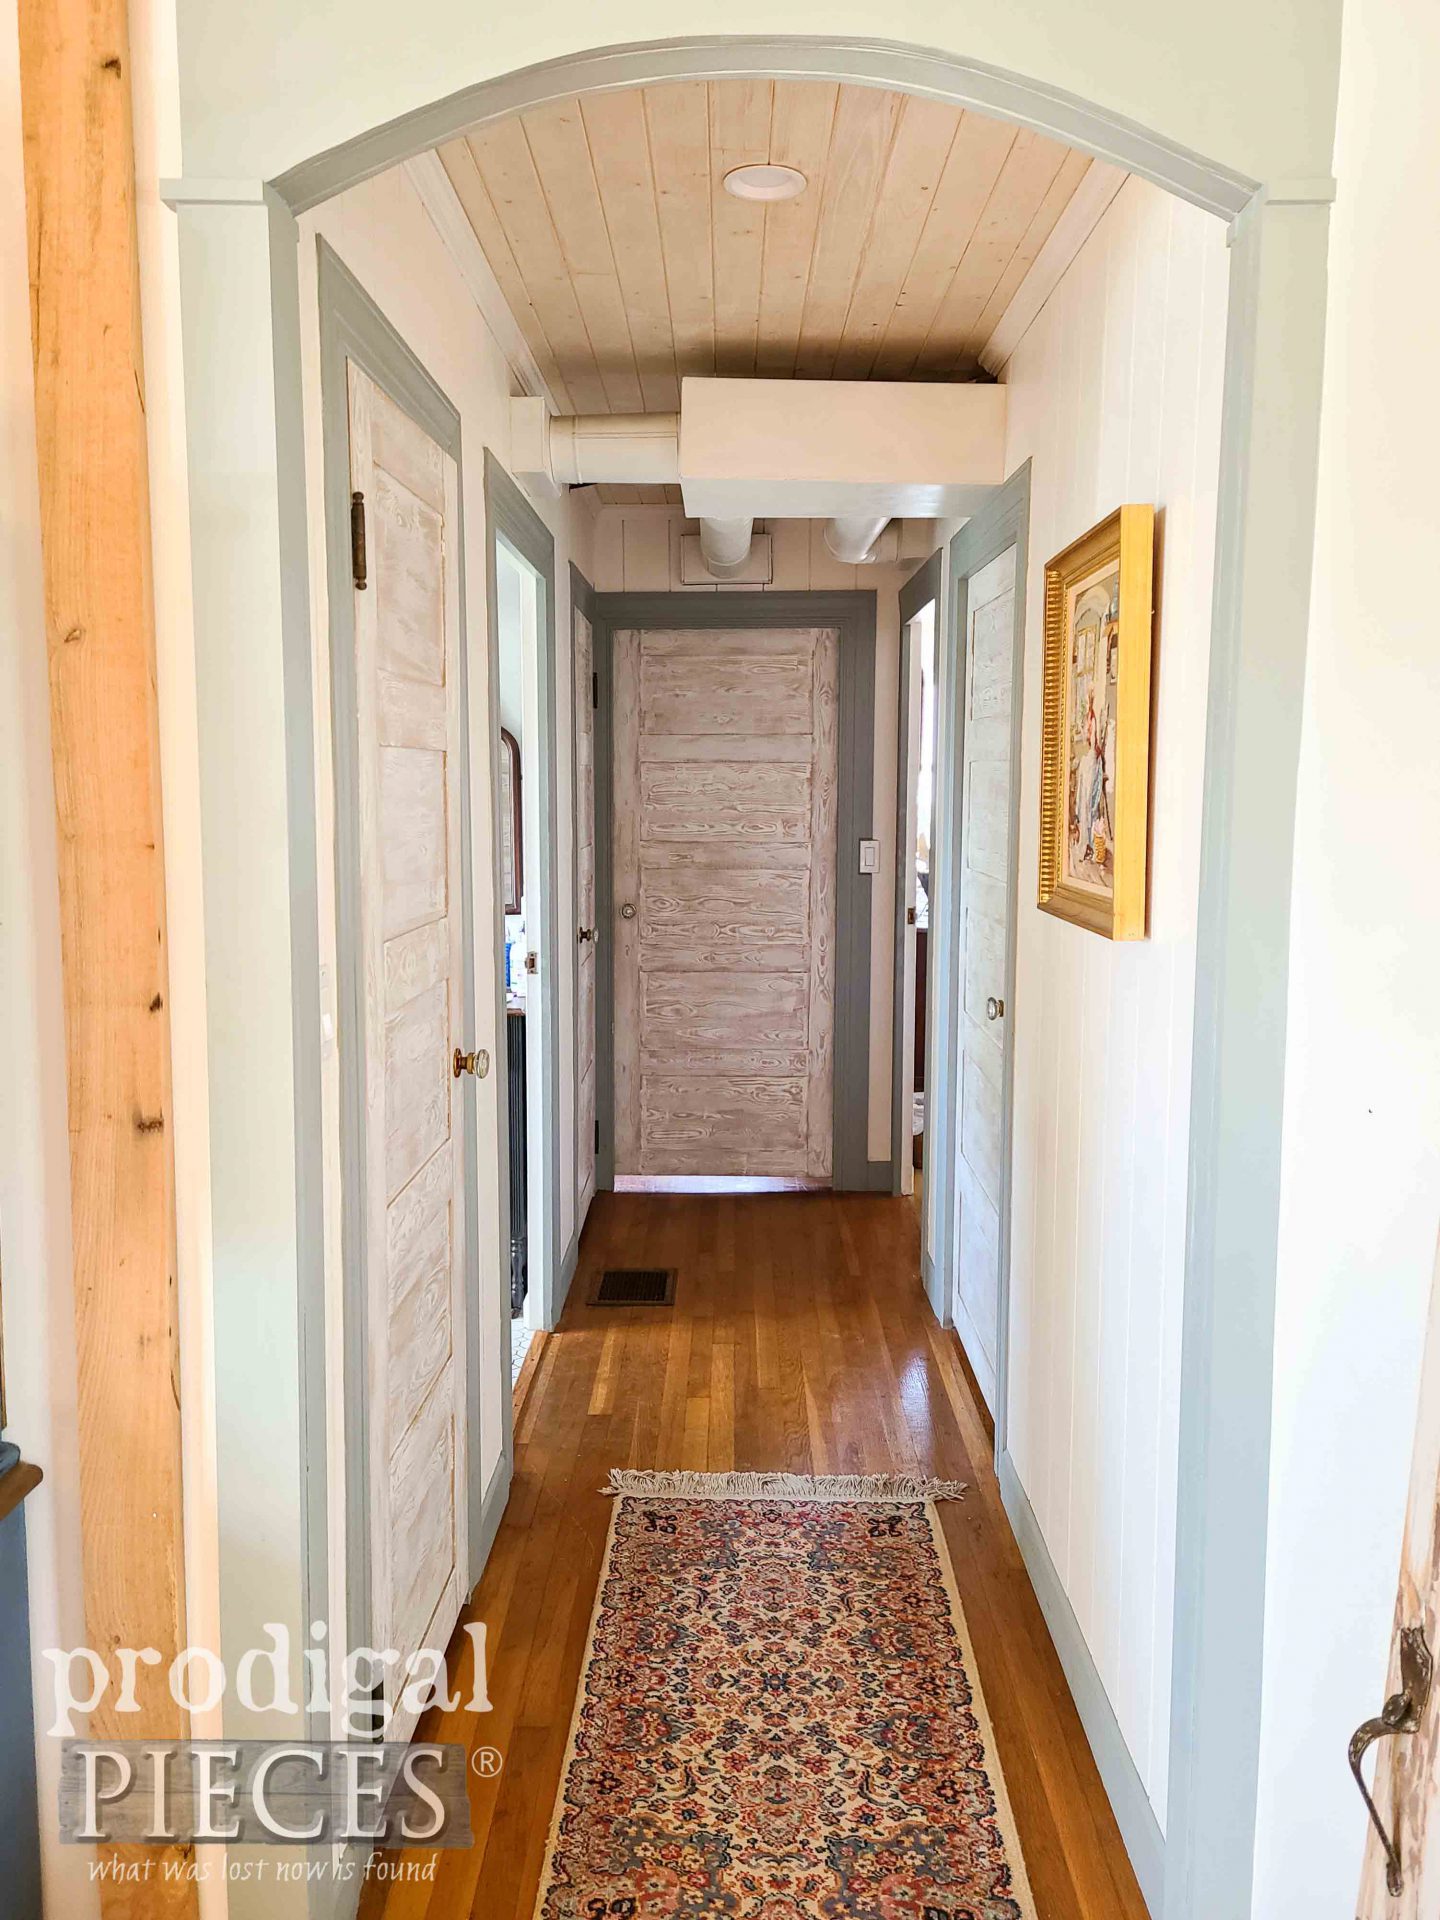 DIY Hallway Remodel After Hollow Core Door Makeover by Larissa of Prodigal Pieces | prodigalpieces.com #prodigalpieces #diy #budgetdecor